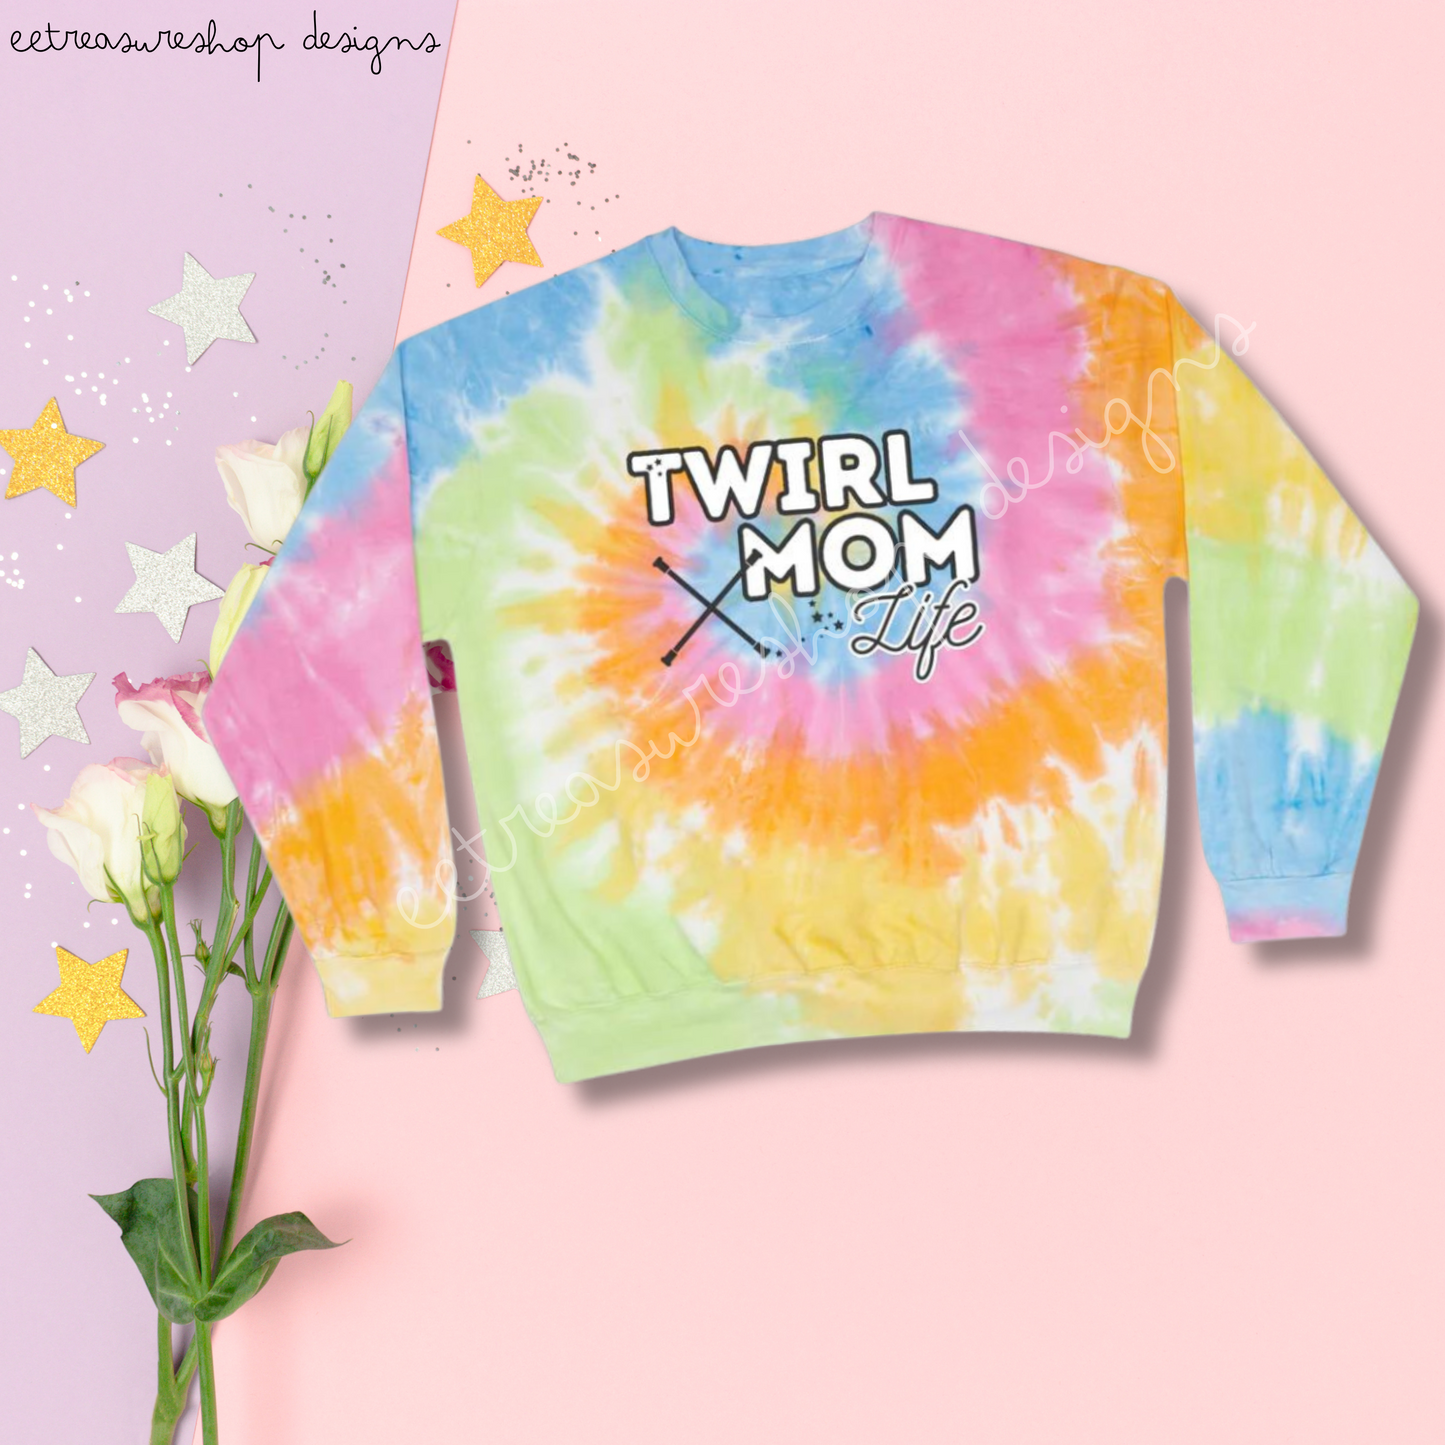 Twirl Mom Life Unisex Tie-Dye Sweatshirt, Rainbow Pink Blue Tie-Dye, Majorette Mom Gift, Baton Twirler Mom Gift